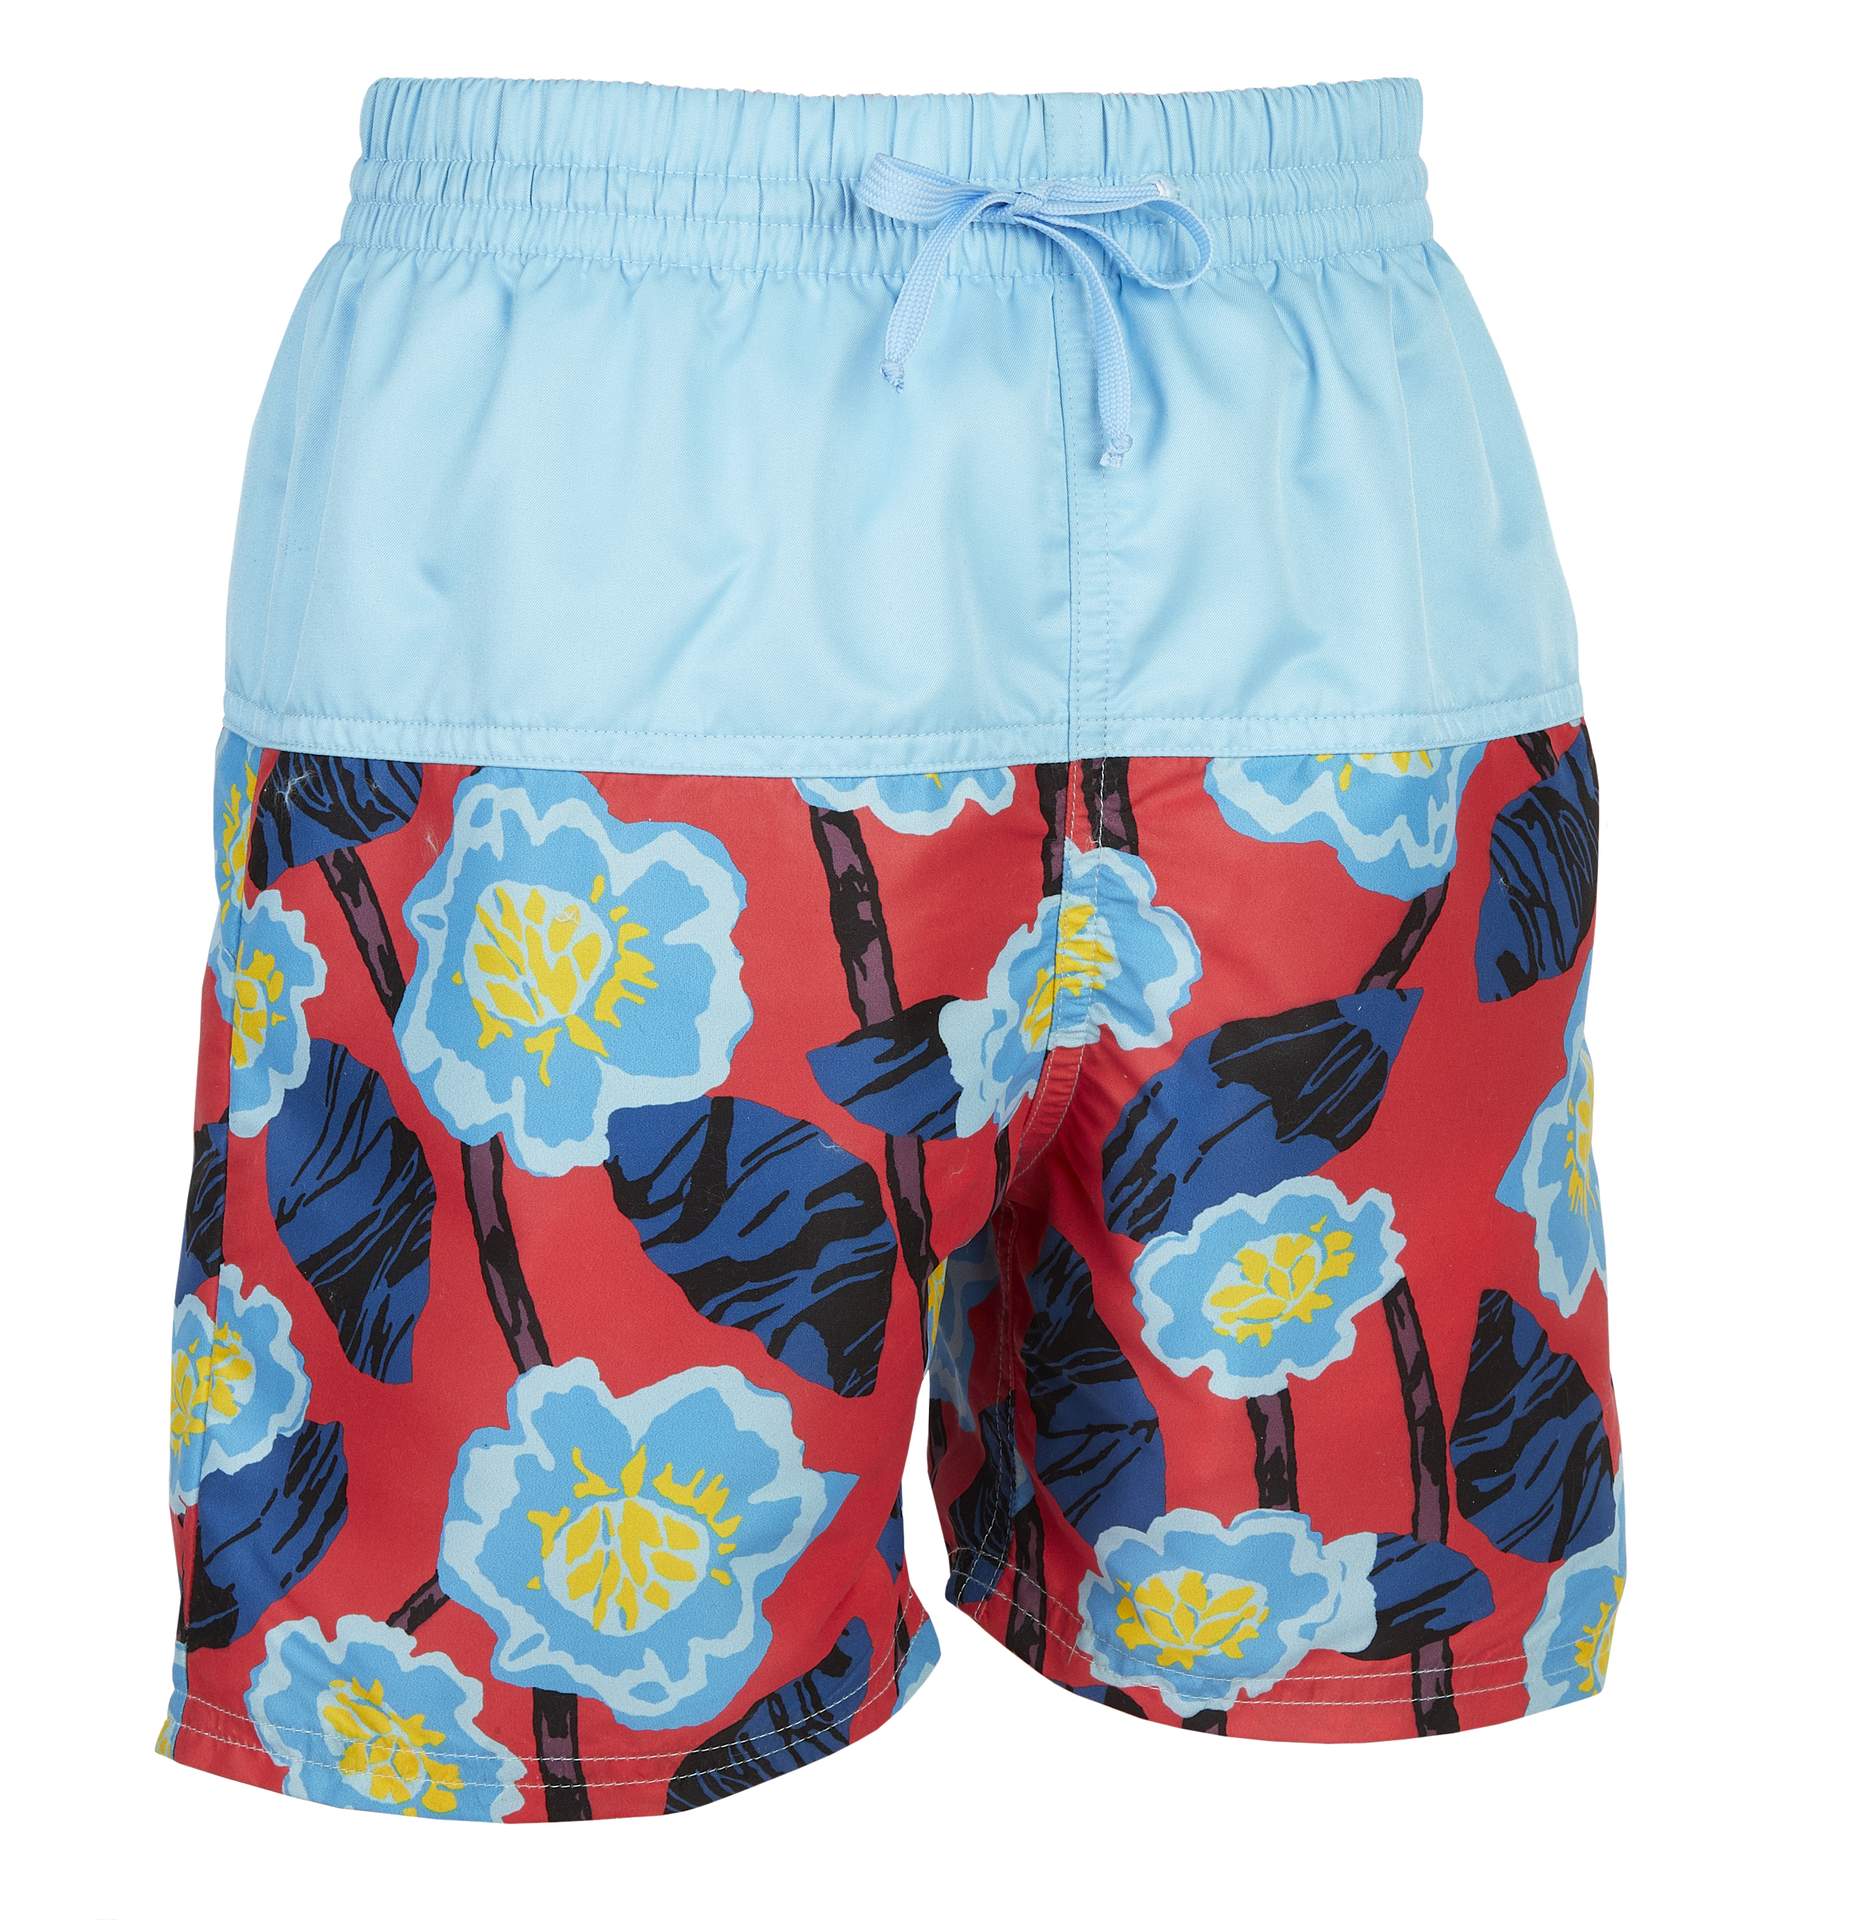 Kes-Vir Boy's Board Swim Shorts - Floral Blue 3